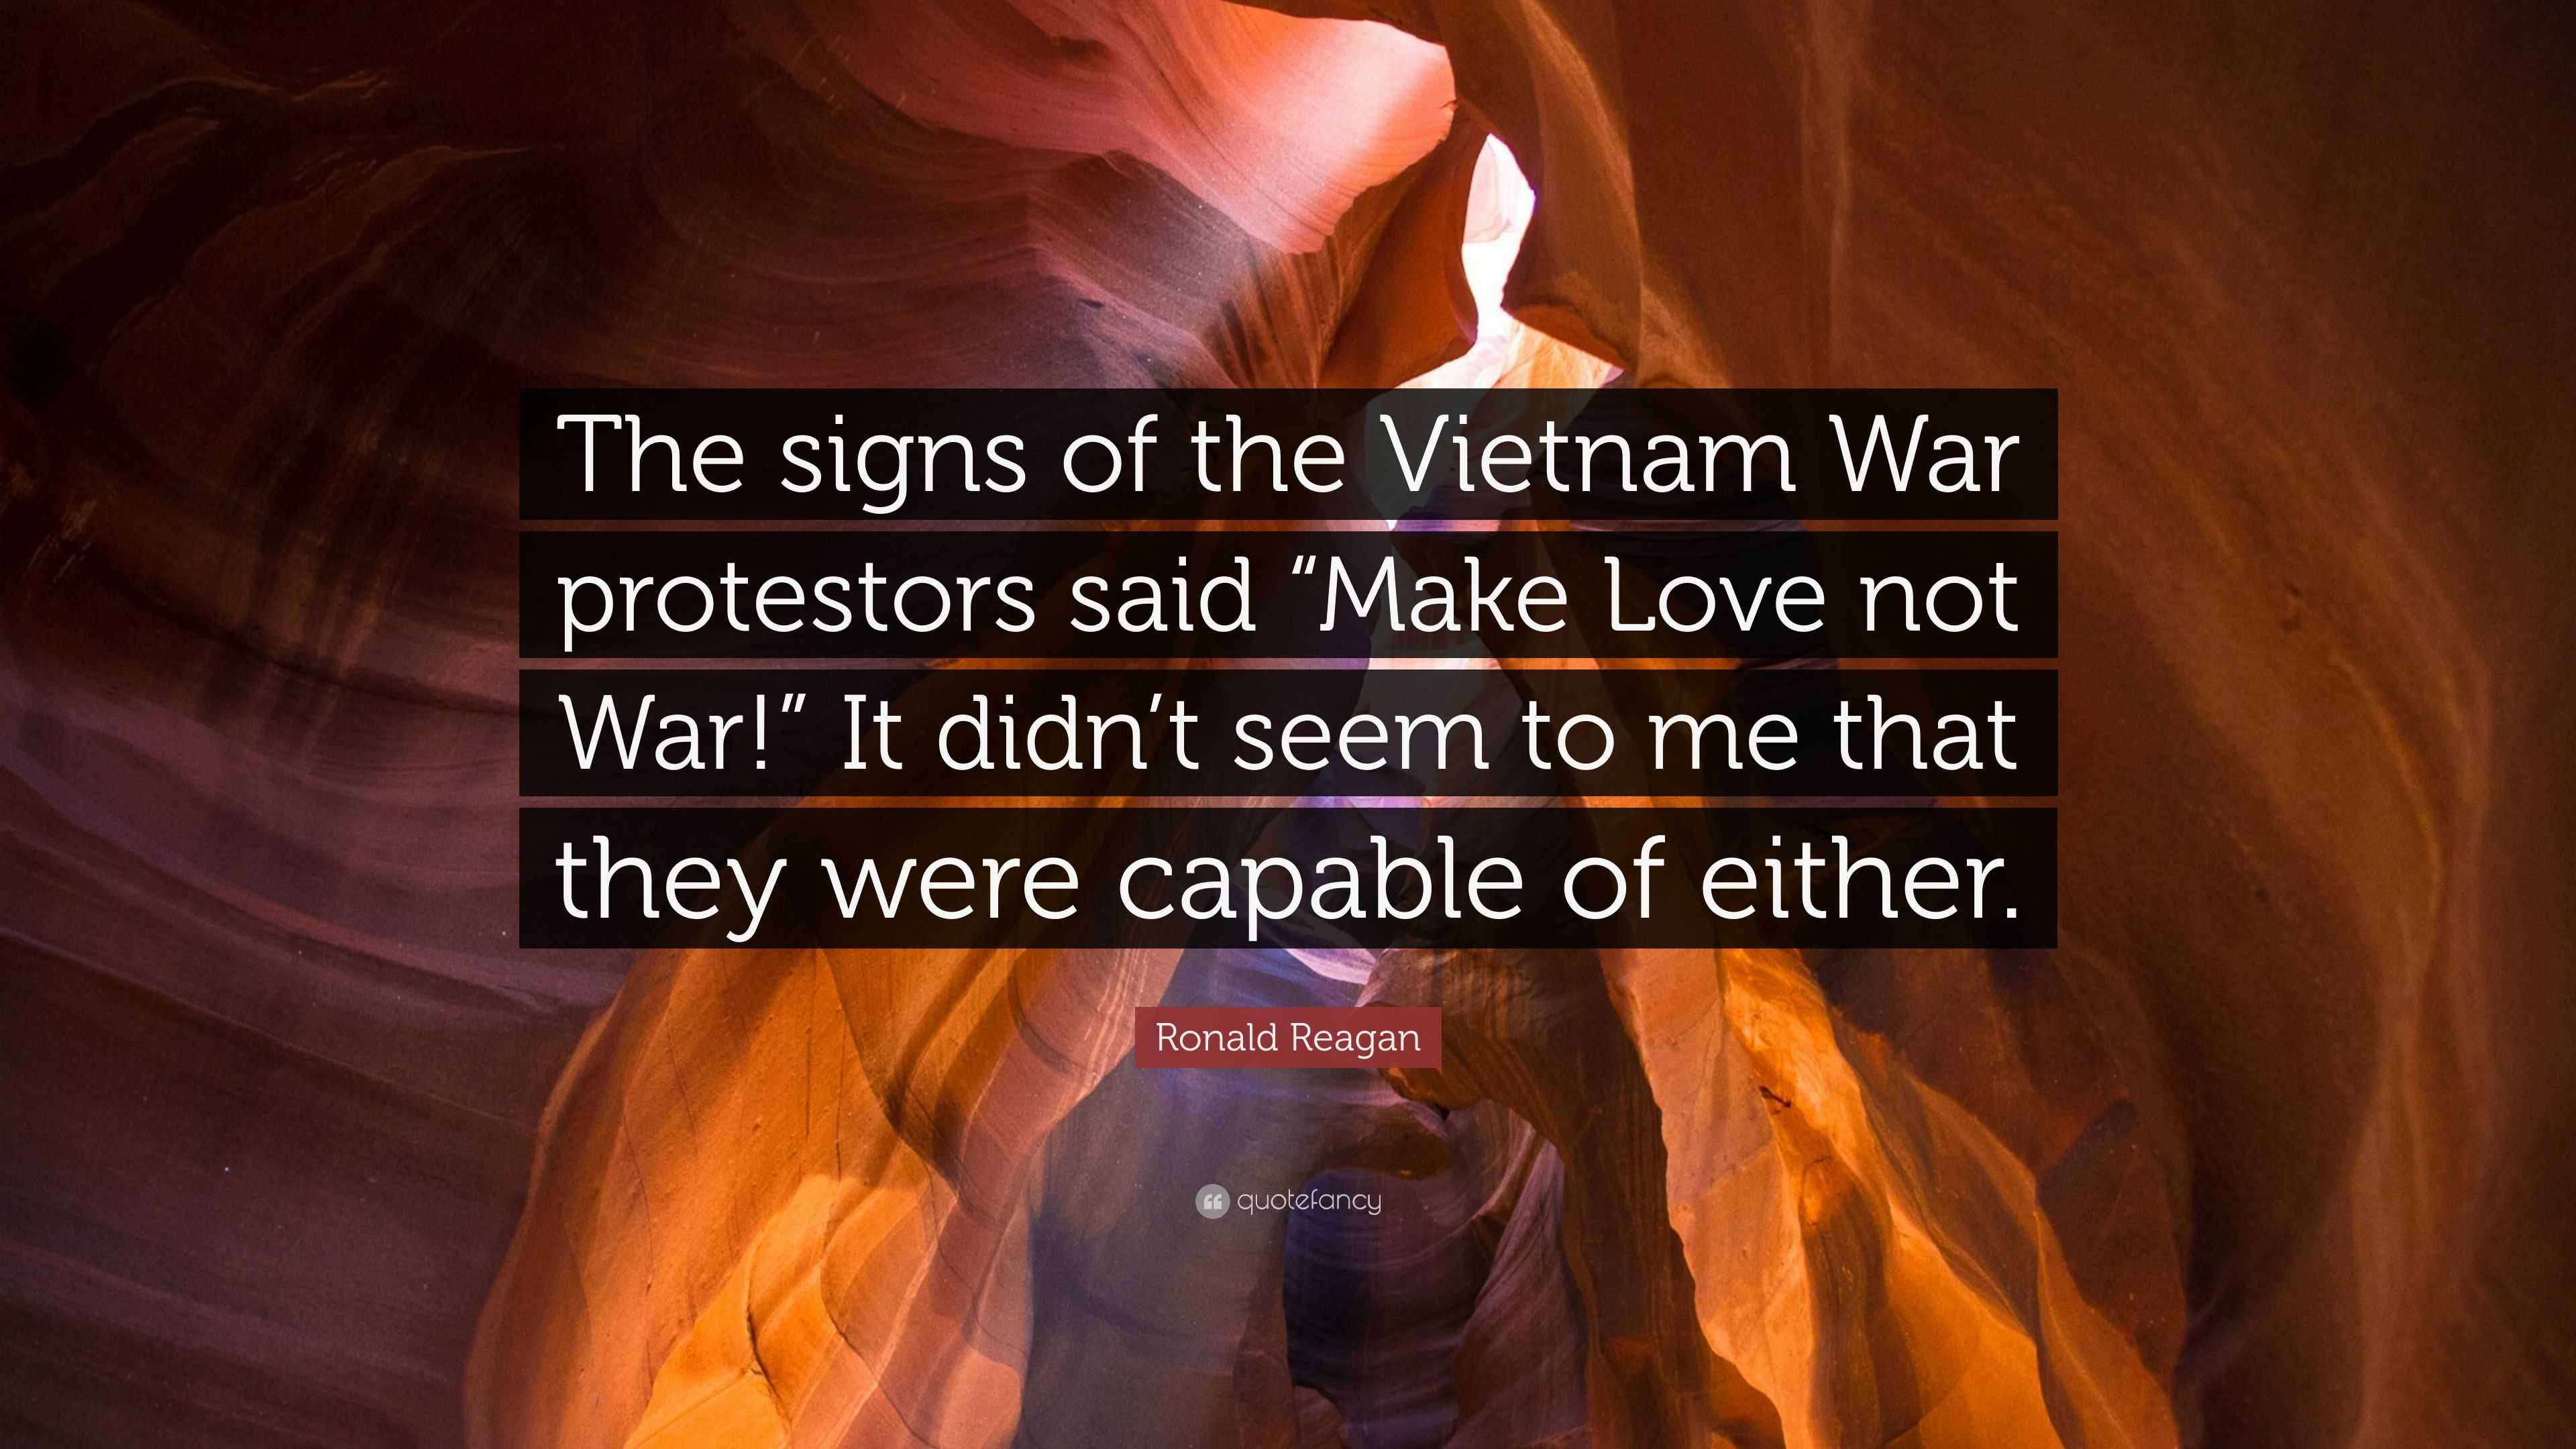 Ronald Reagan Quote “The signs of the Vietnam War protestors said “Make Love